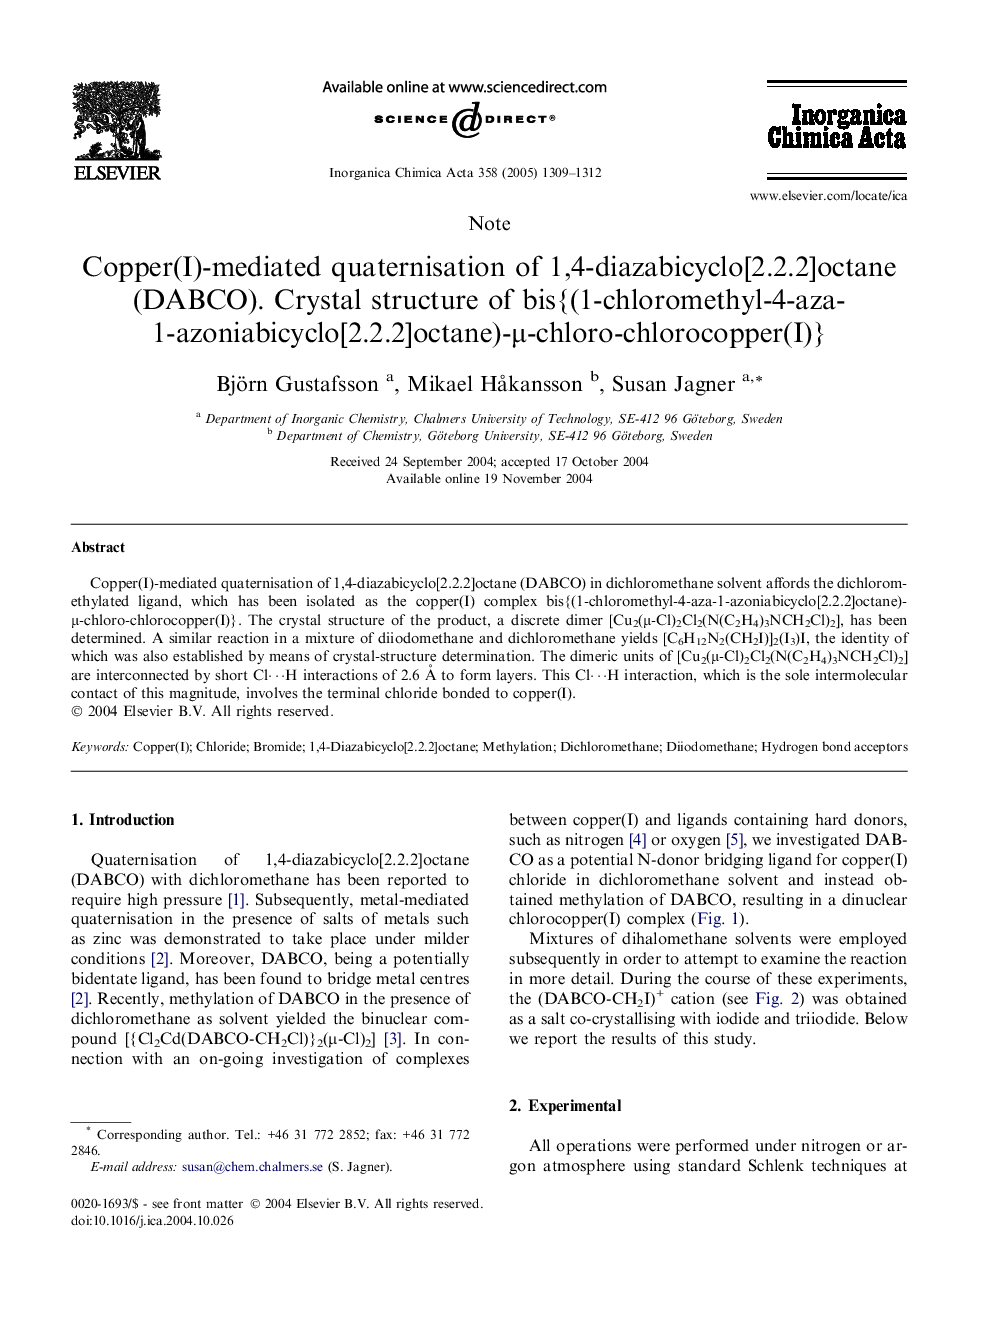 Copper(I)-mediated quaternisation of 1,4-diazabicyclo[2.2.2]octane (DABCO). Crystal structure of bis{(1-chloromethyl-4-aza-1-azoniabicyclo[2.2.2]octane)-Î¼-chloro-chlorocopper(I)}